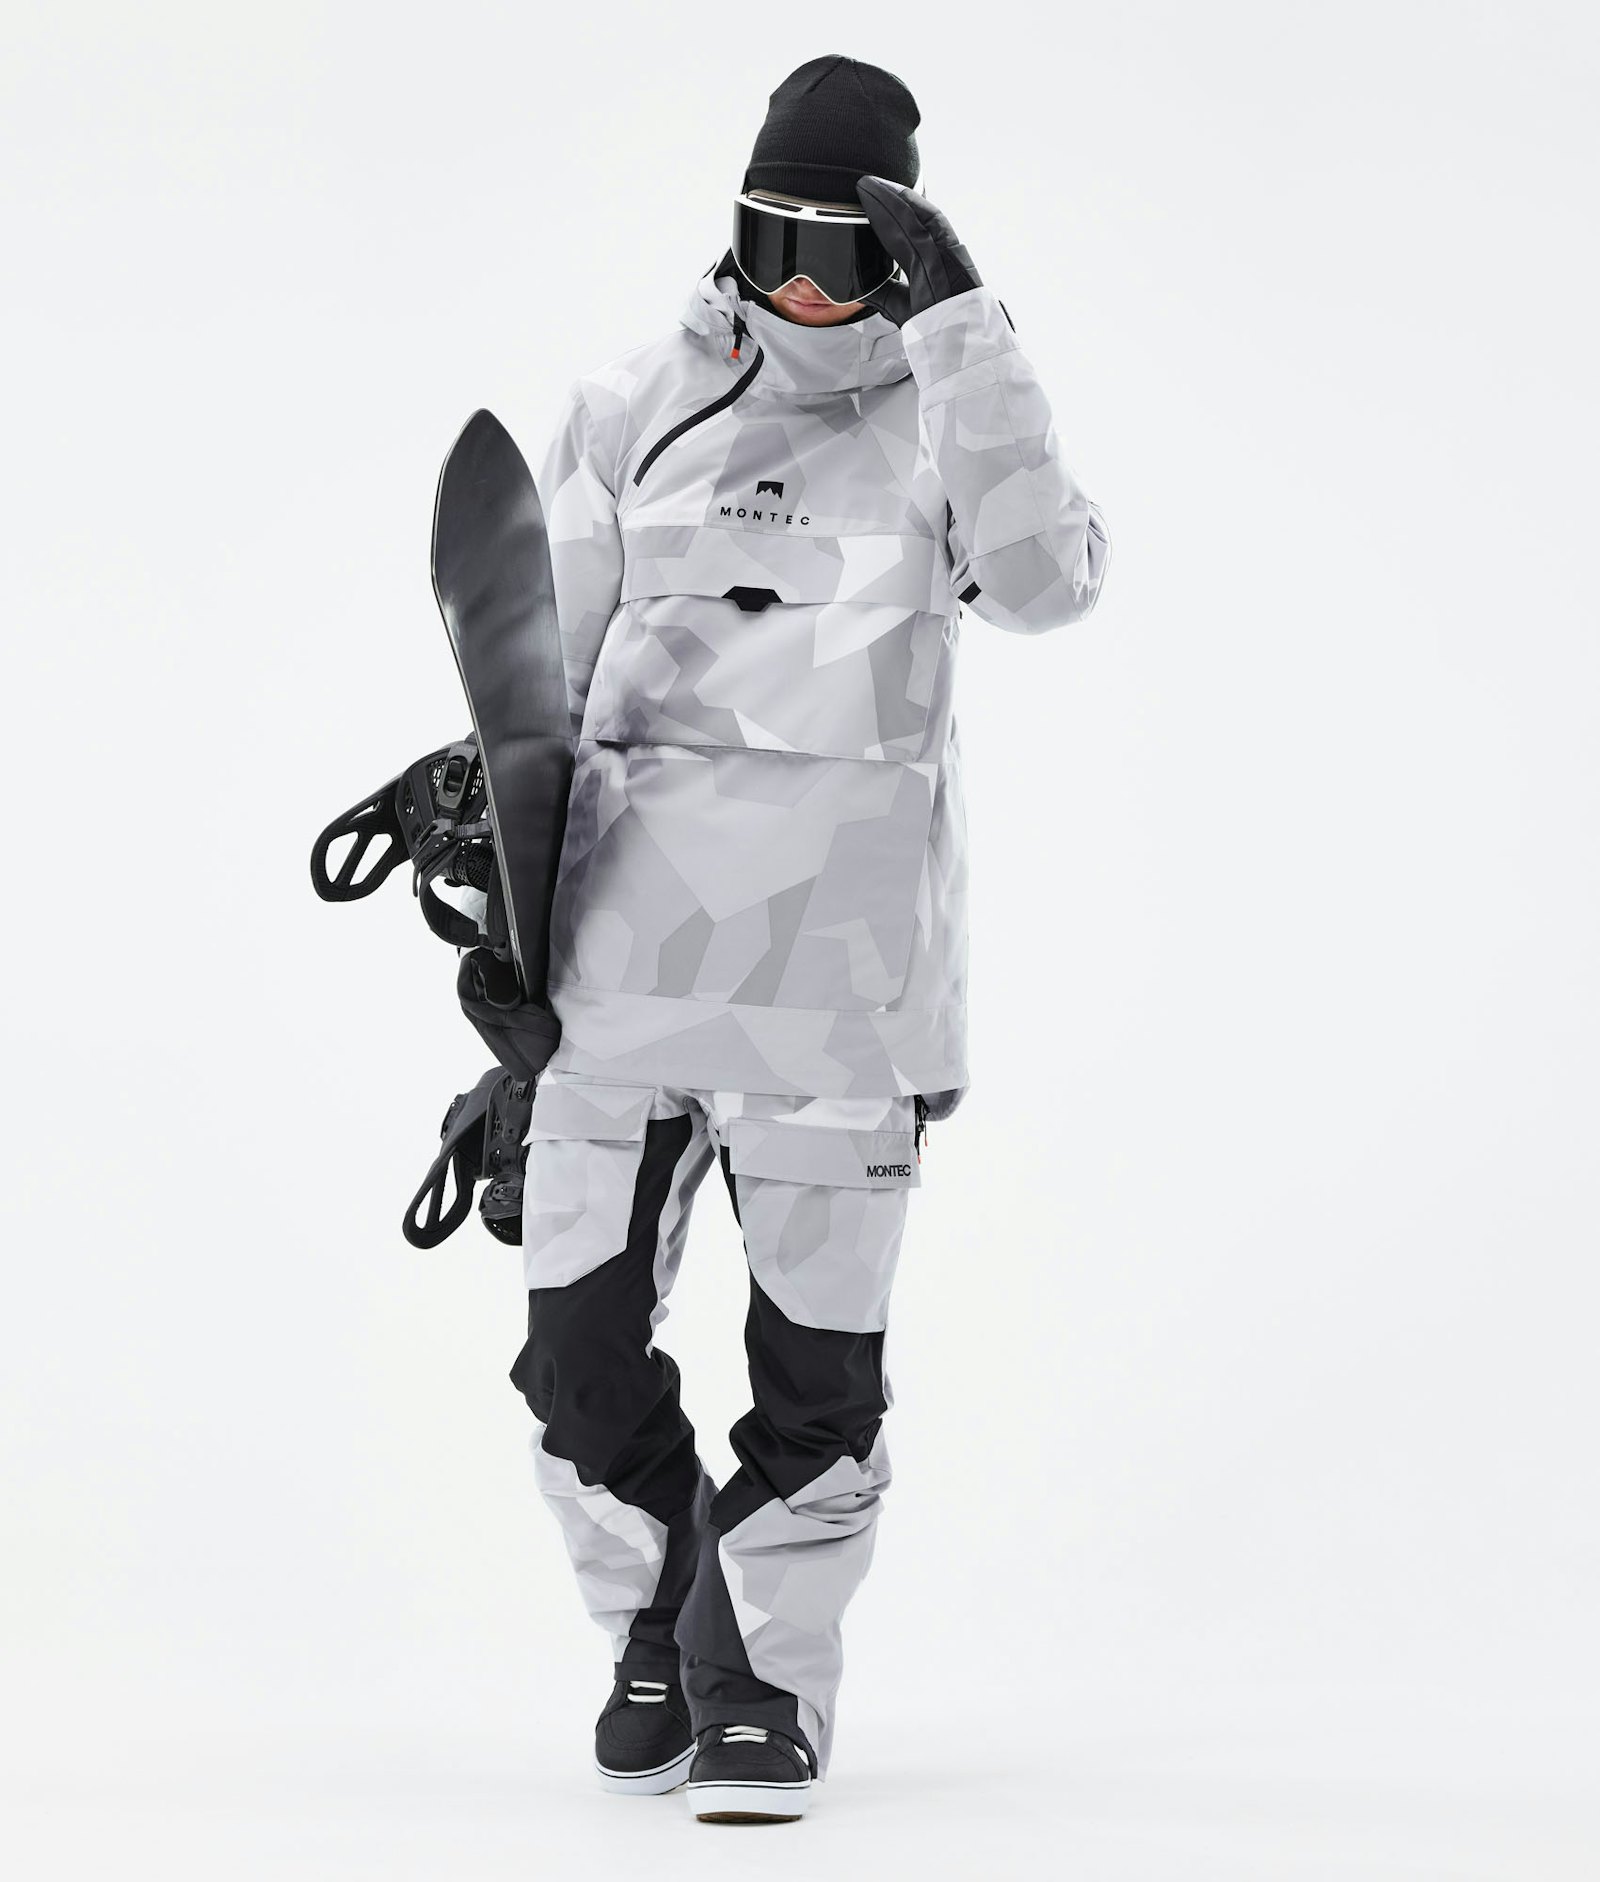 Dune 2021 Veste Snowboard Homme Snow Camo